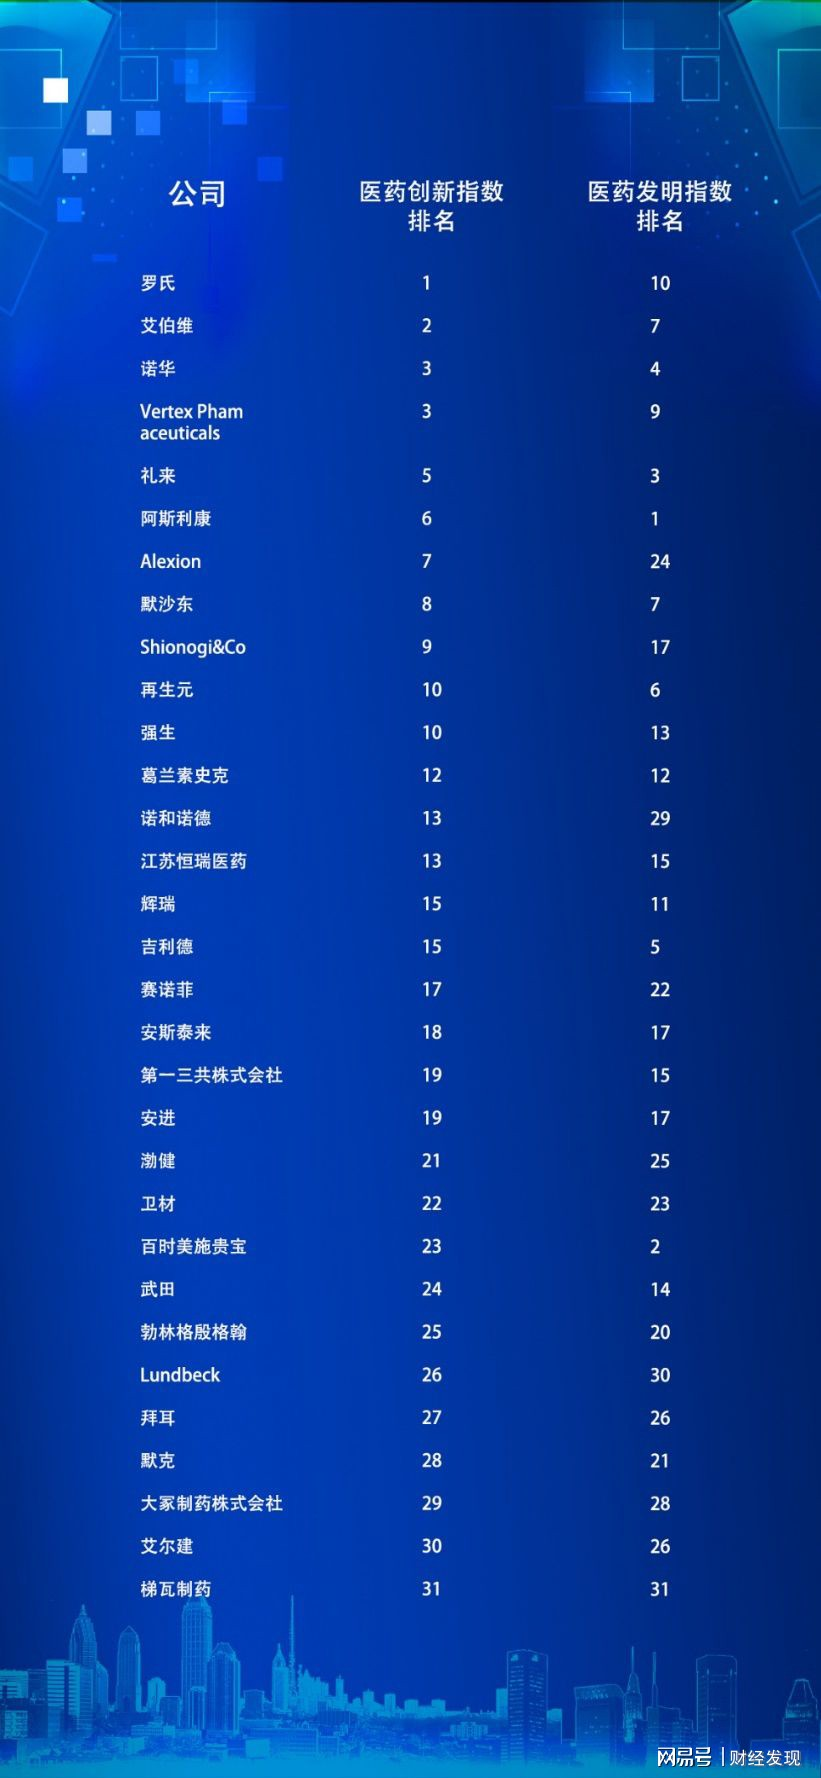 2020医药创新<font color="red">指数</font>排行榜，恒瑞成为中国唯一上榜企业，全球第13